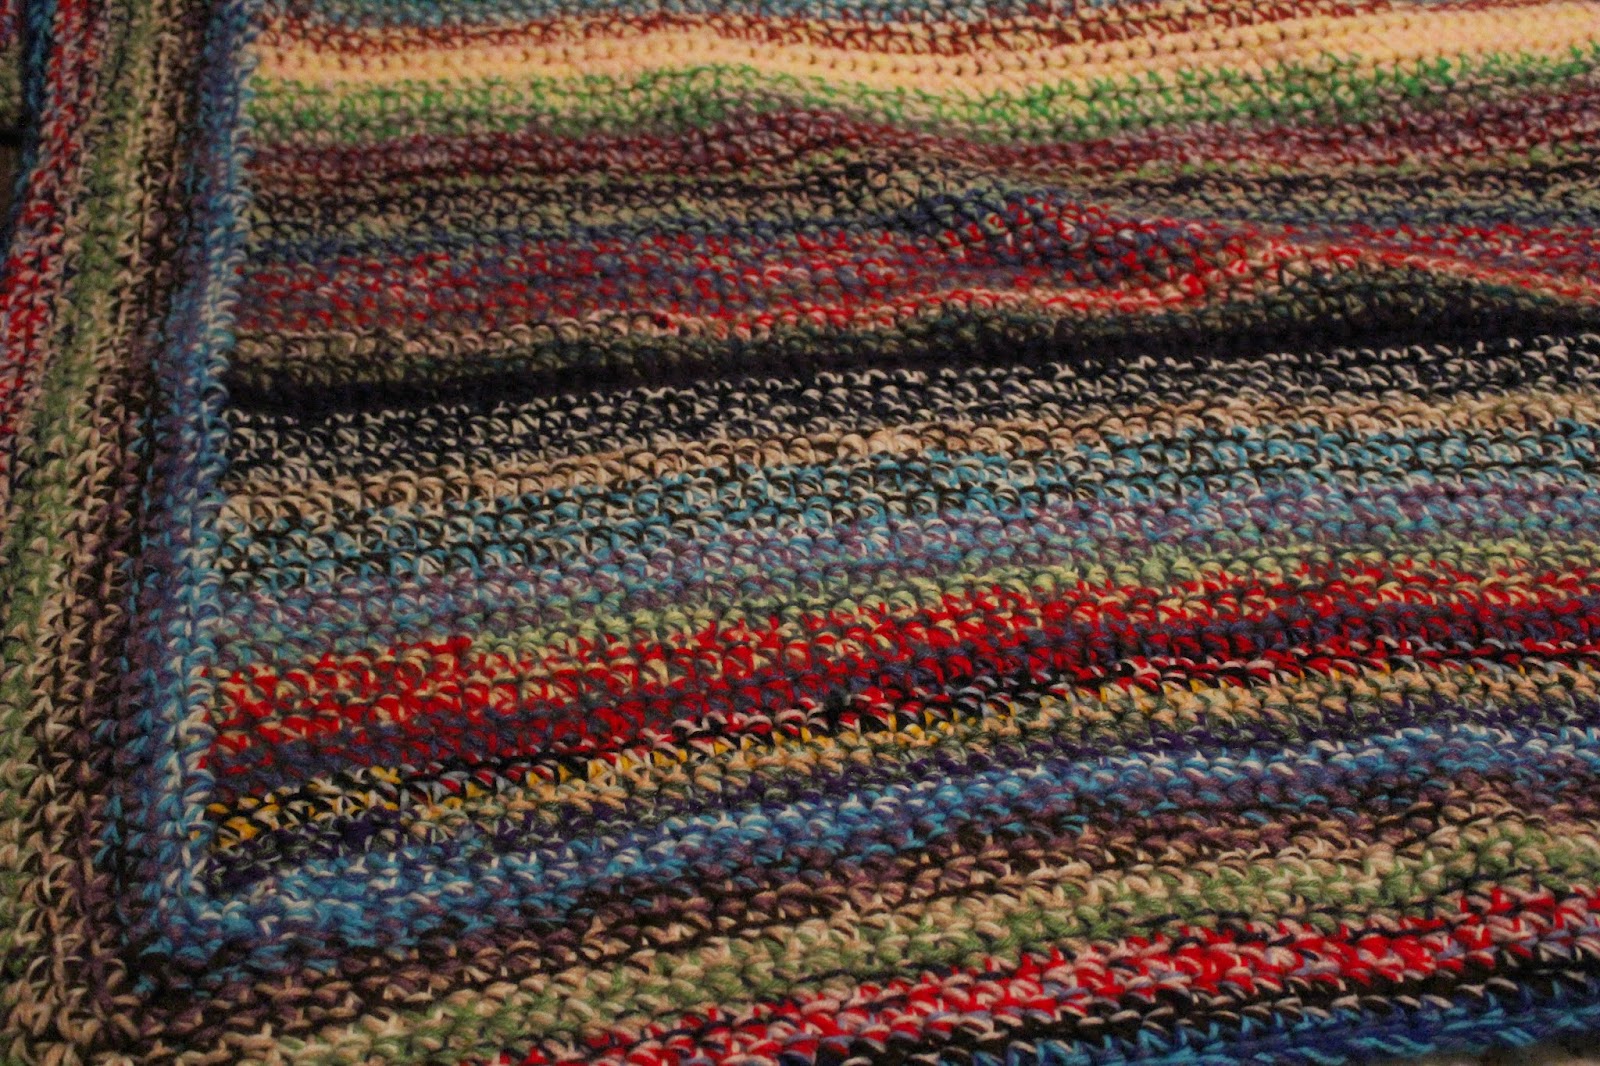 Snug Harbor Bay: Crocheted Scrap Blanket